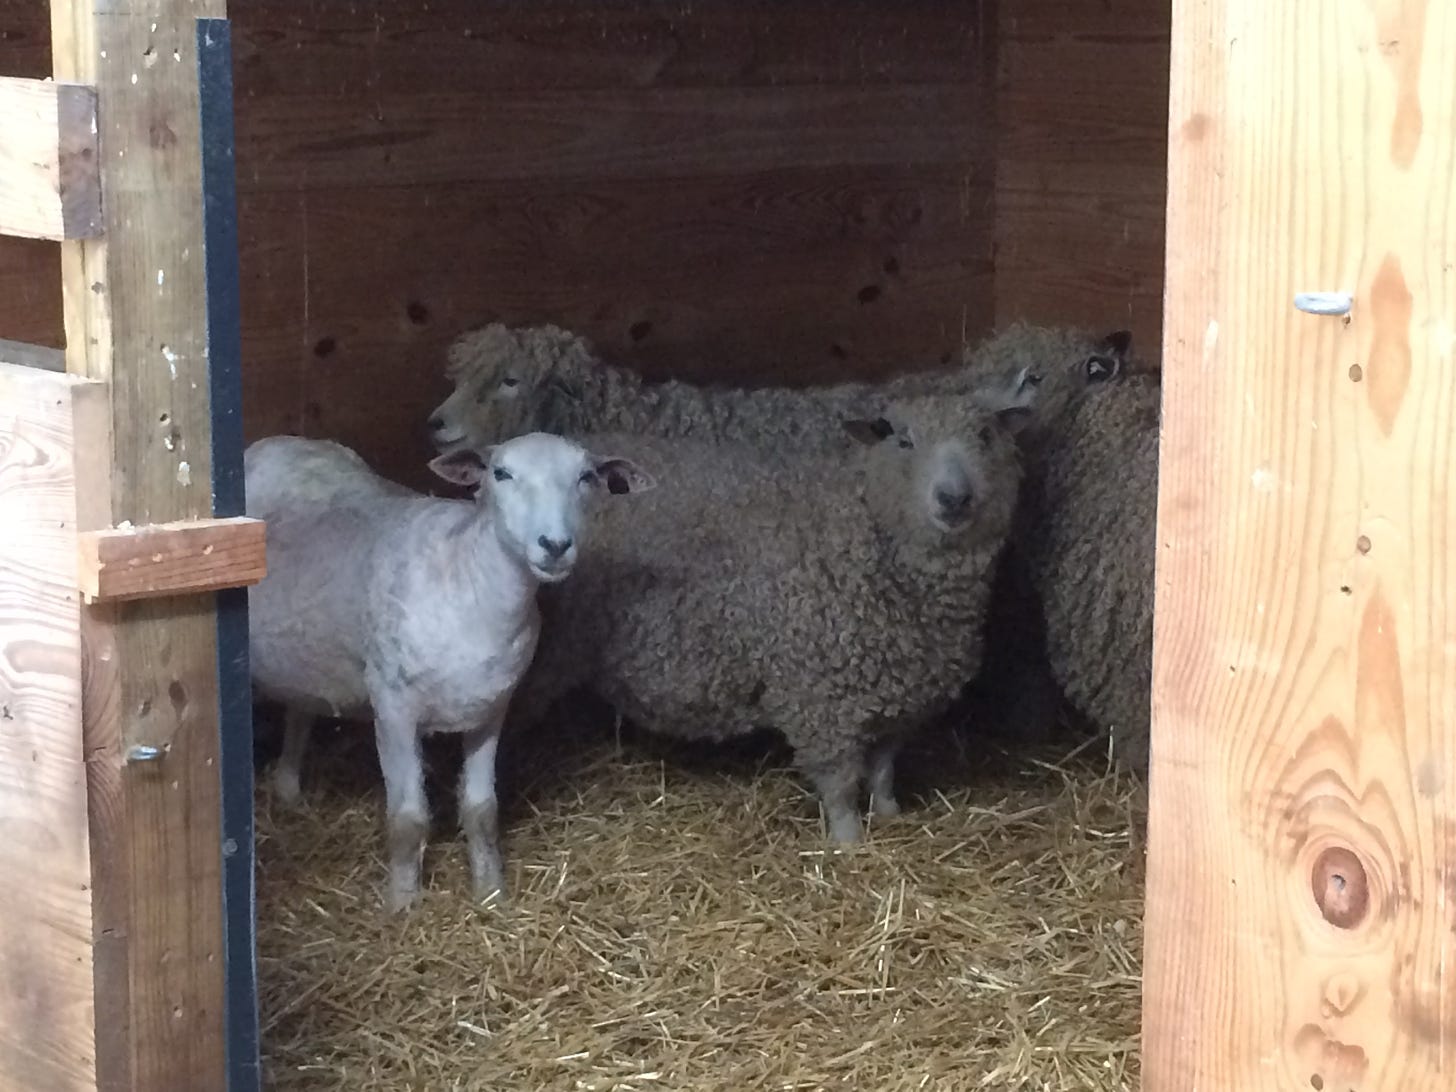 One shorn sheep, and 3 unshorn sheep in a barn